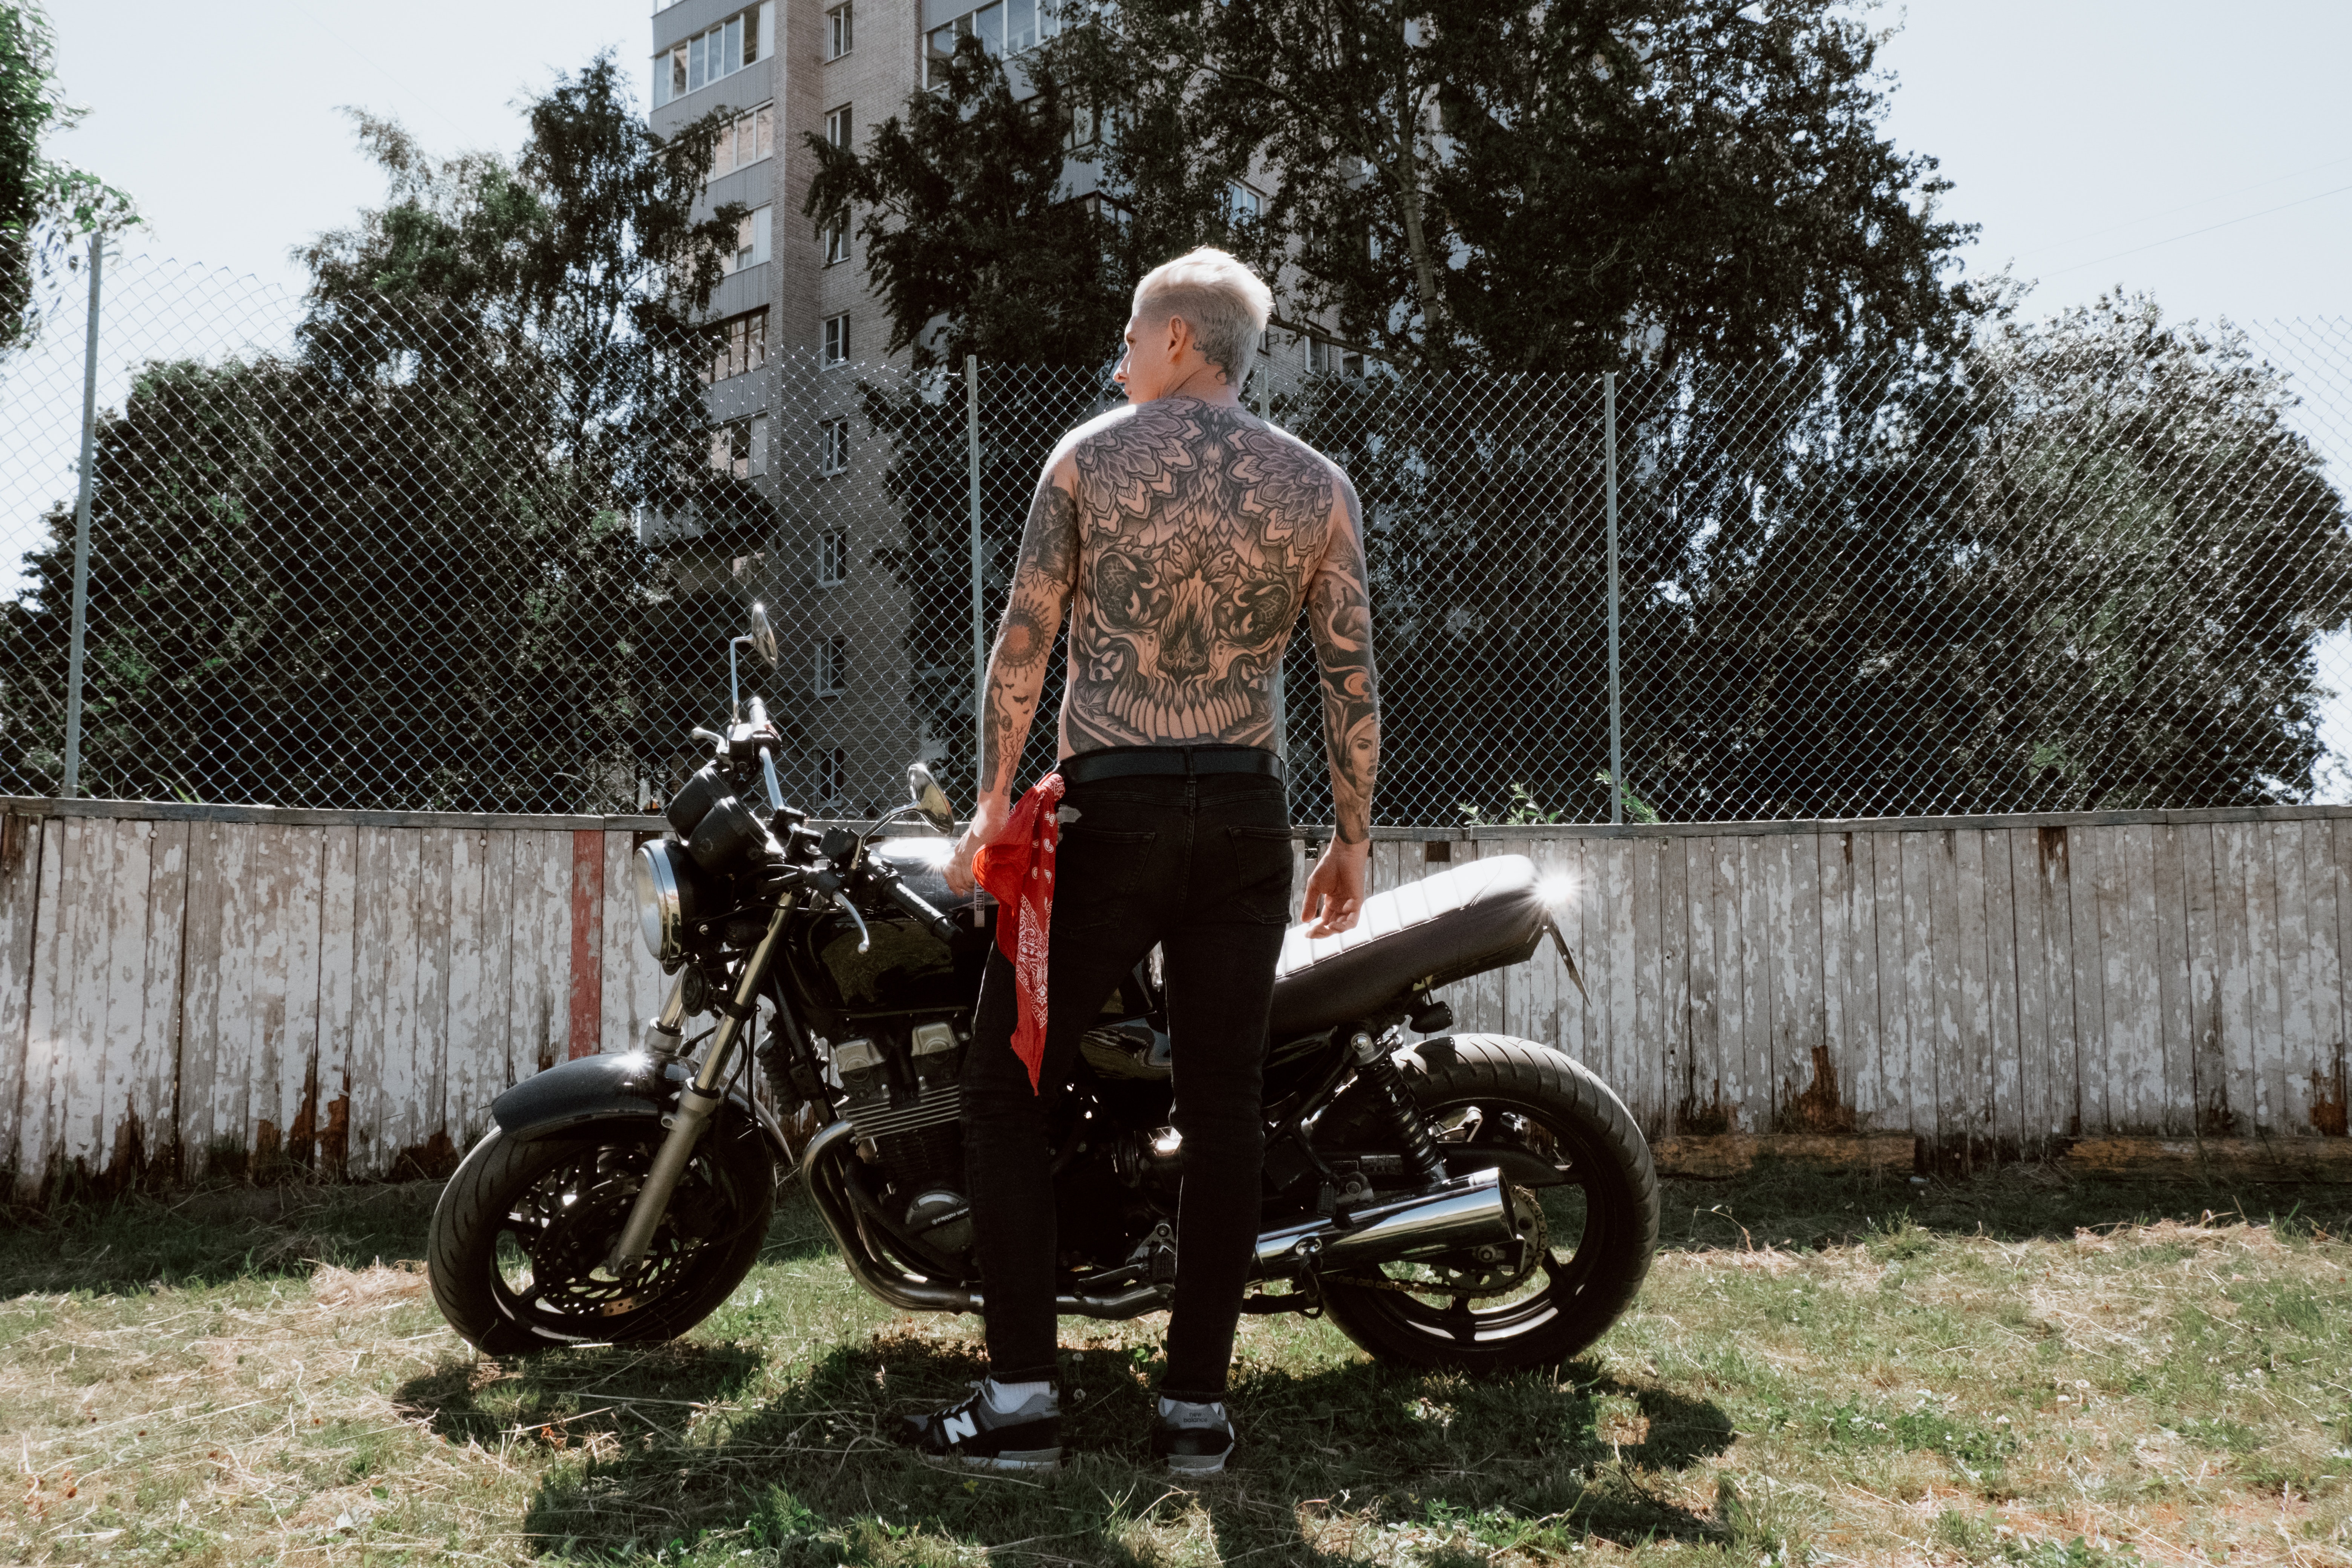 Motorbike Tattoo On Back - Tattoos Designs